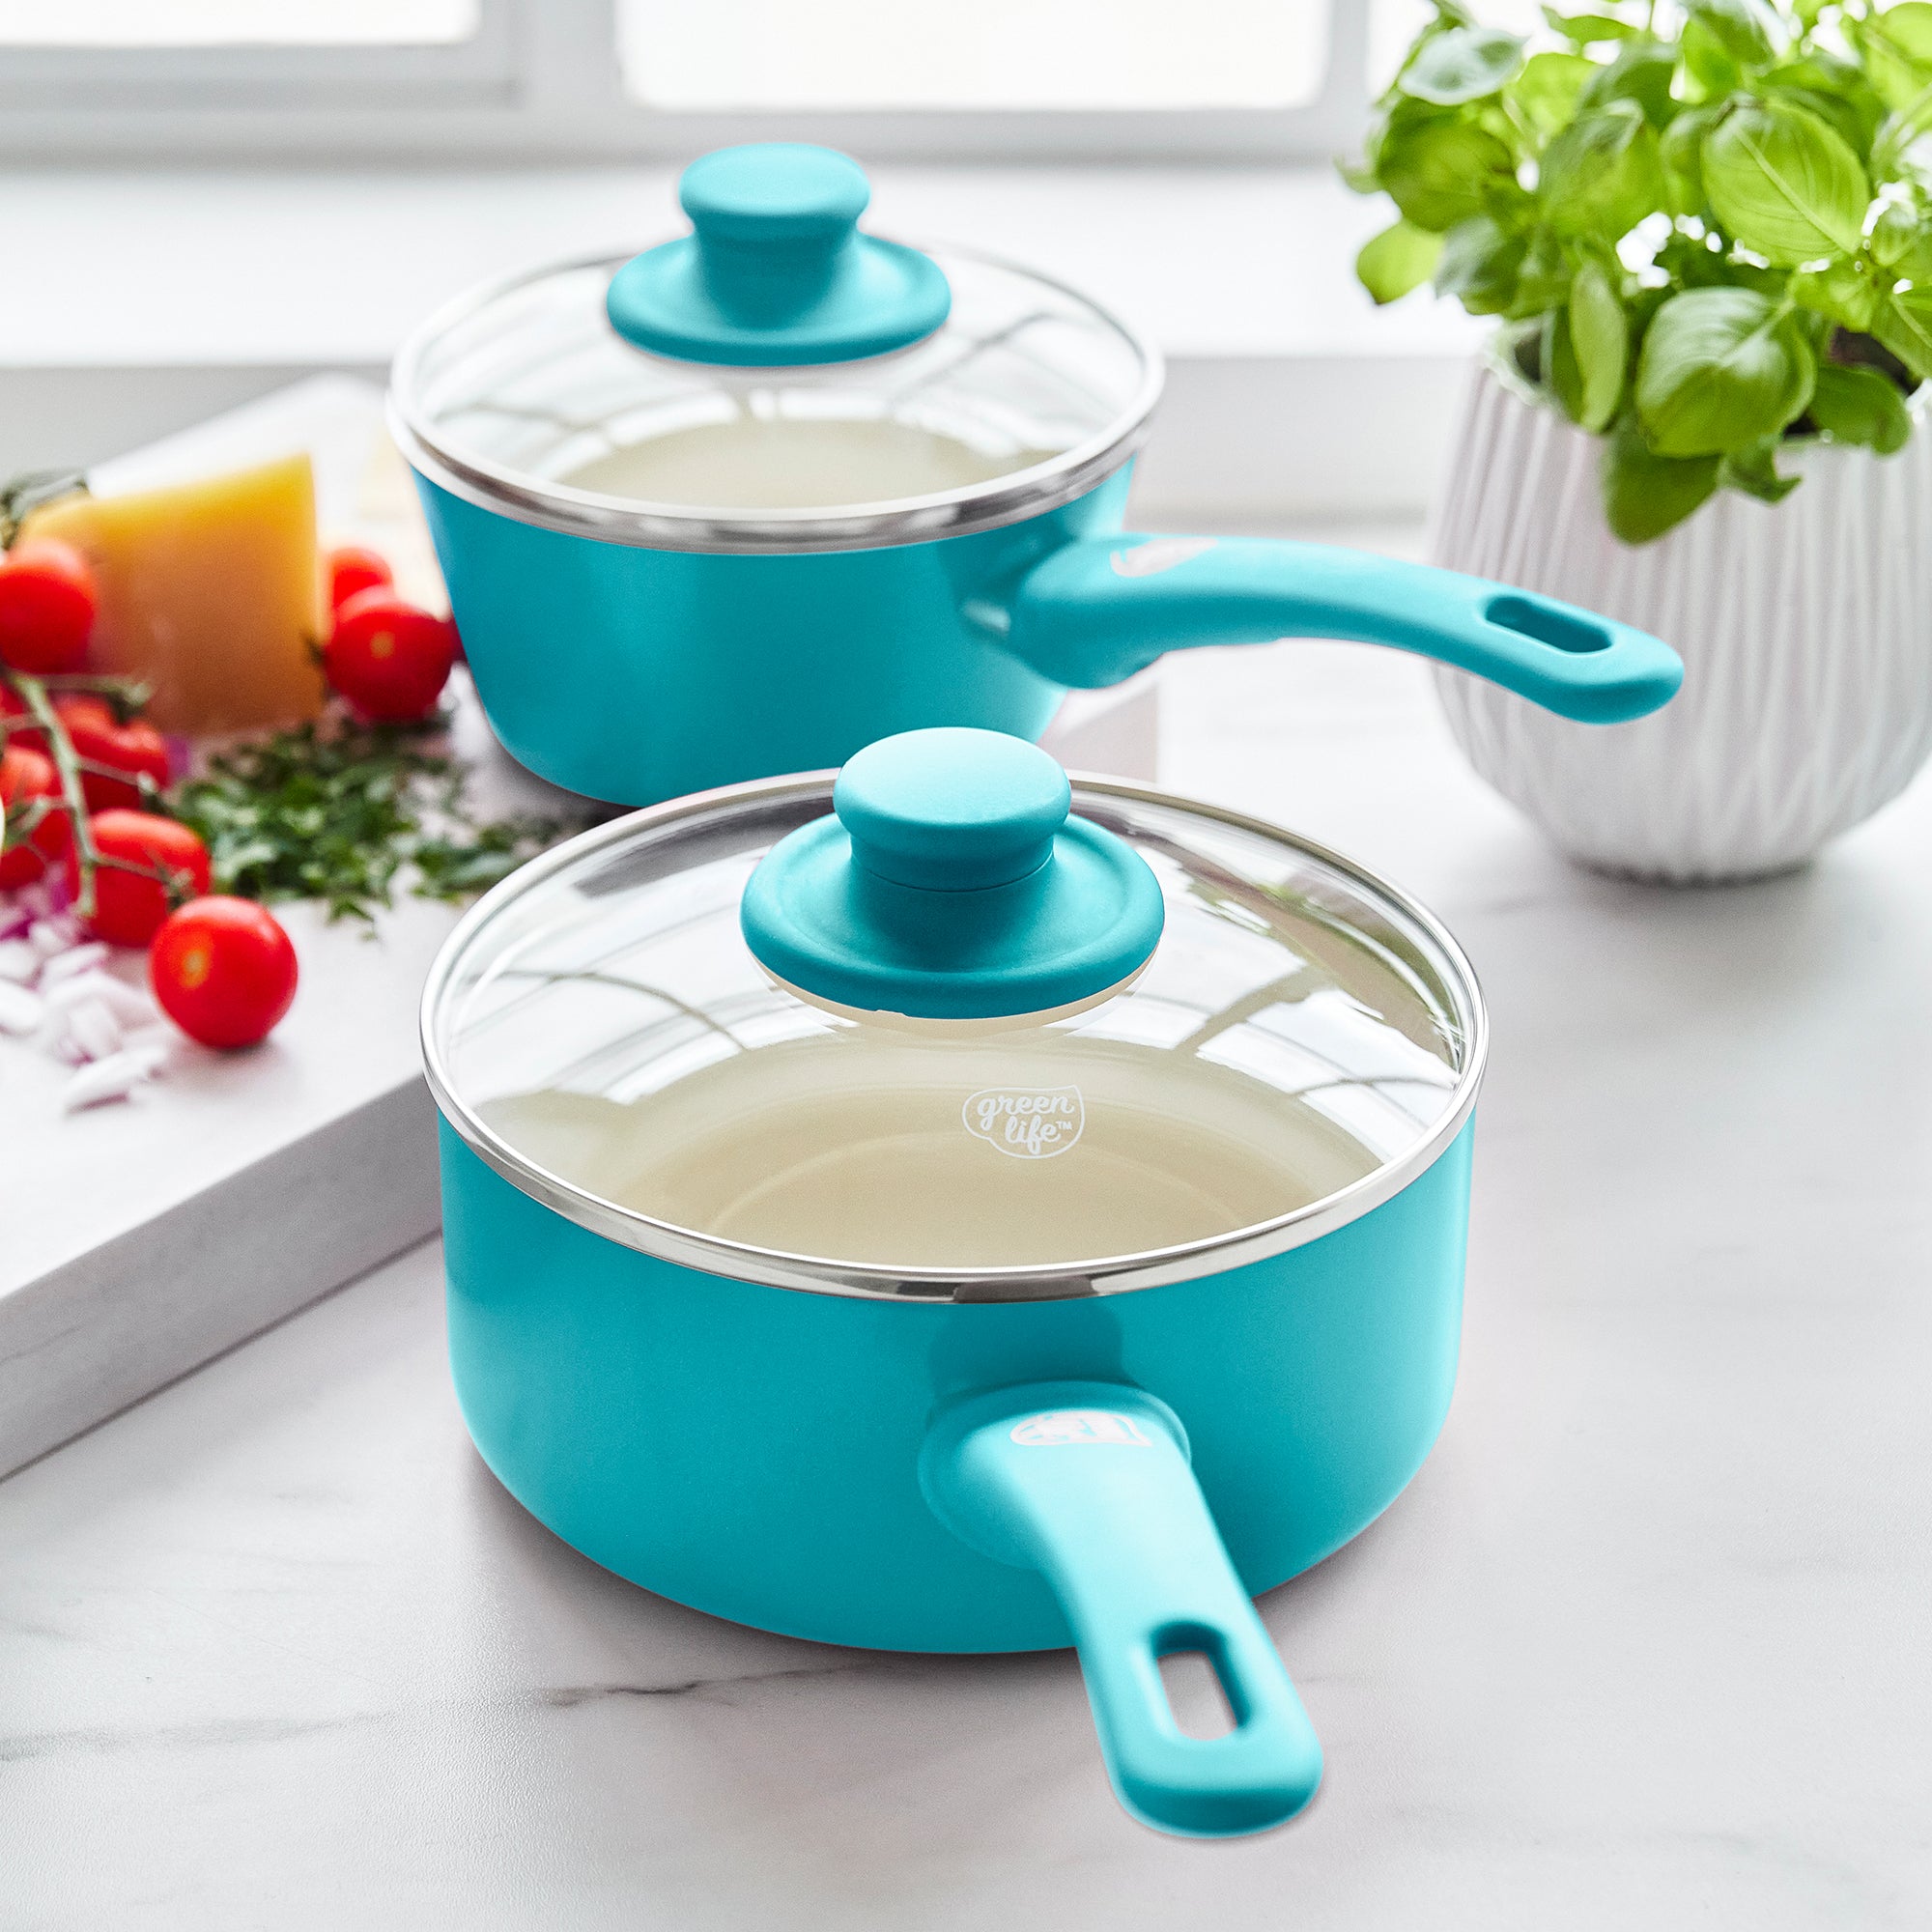 GreenLife Soft Grip Healthy Ceramic Nonstick, 1qt and 2qt Saucepan Pot Set with Lids, PFAS-Free, Dishwasher Safe, Caribbean Blue